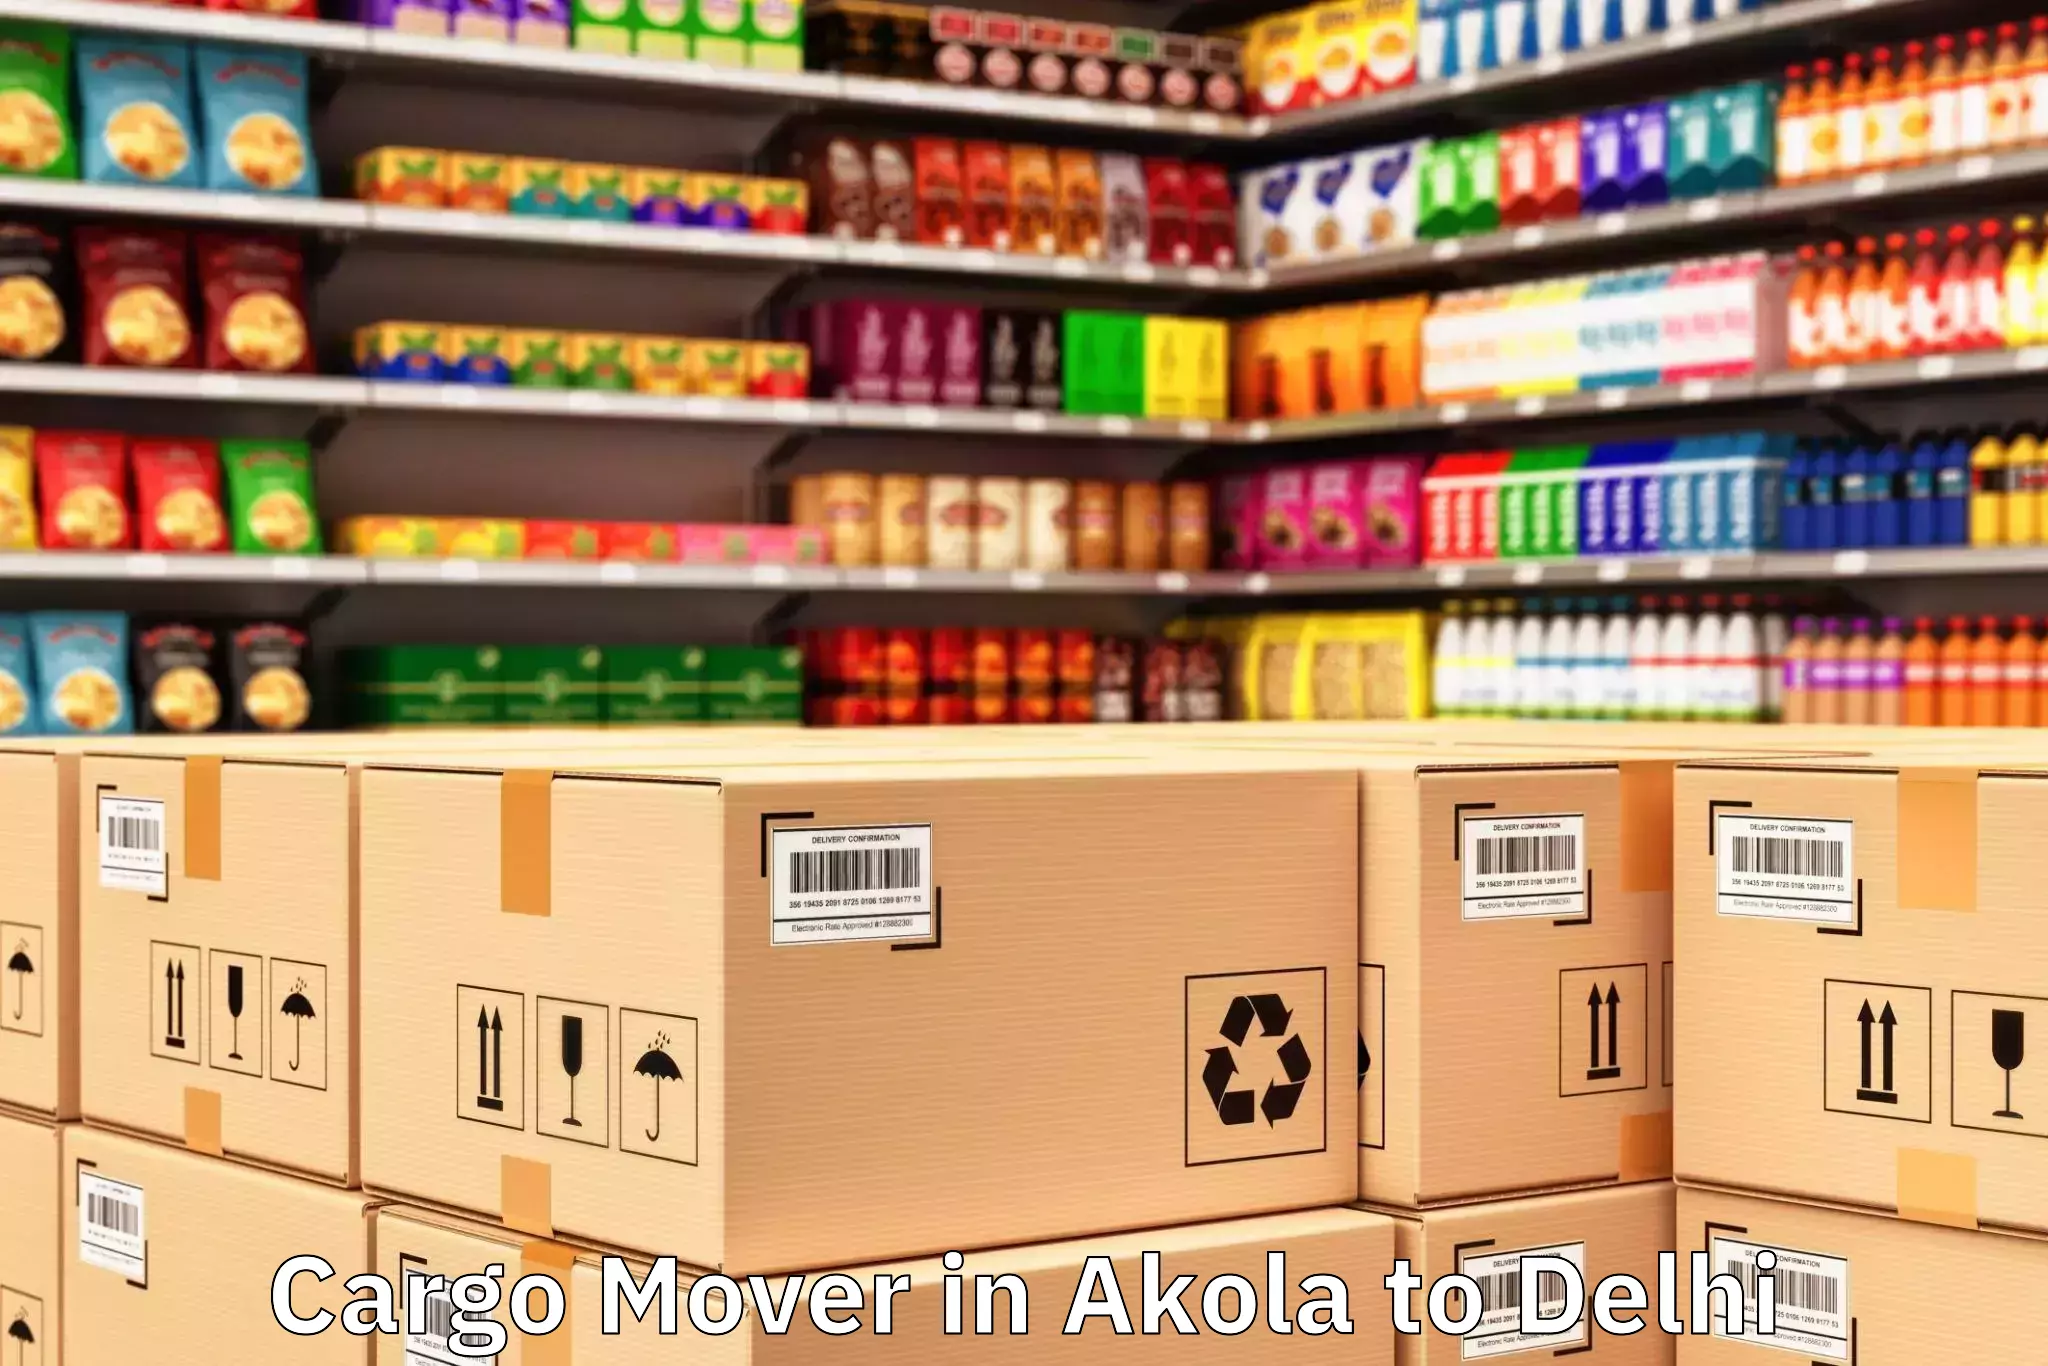 Easy Akola to East Delhi Mall Cargo Mover Booking